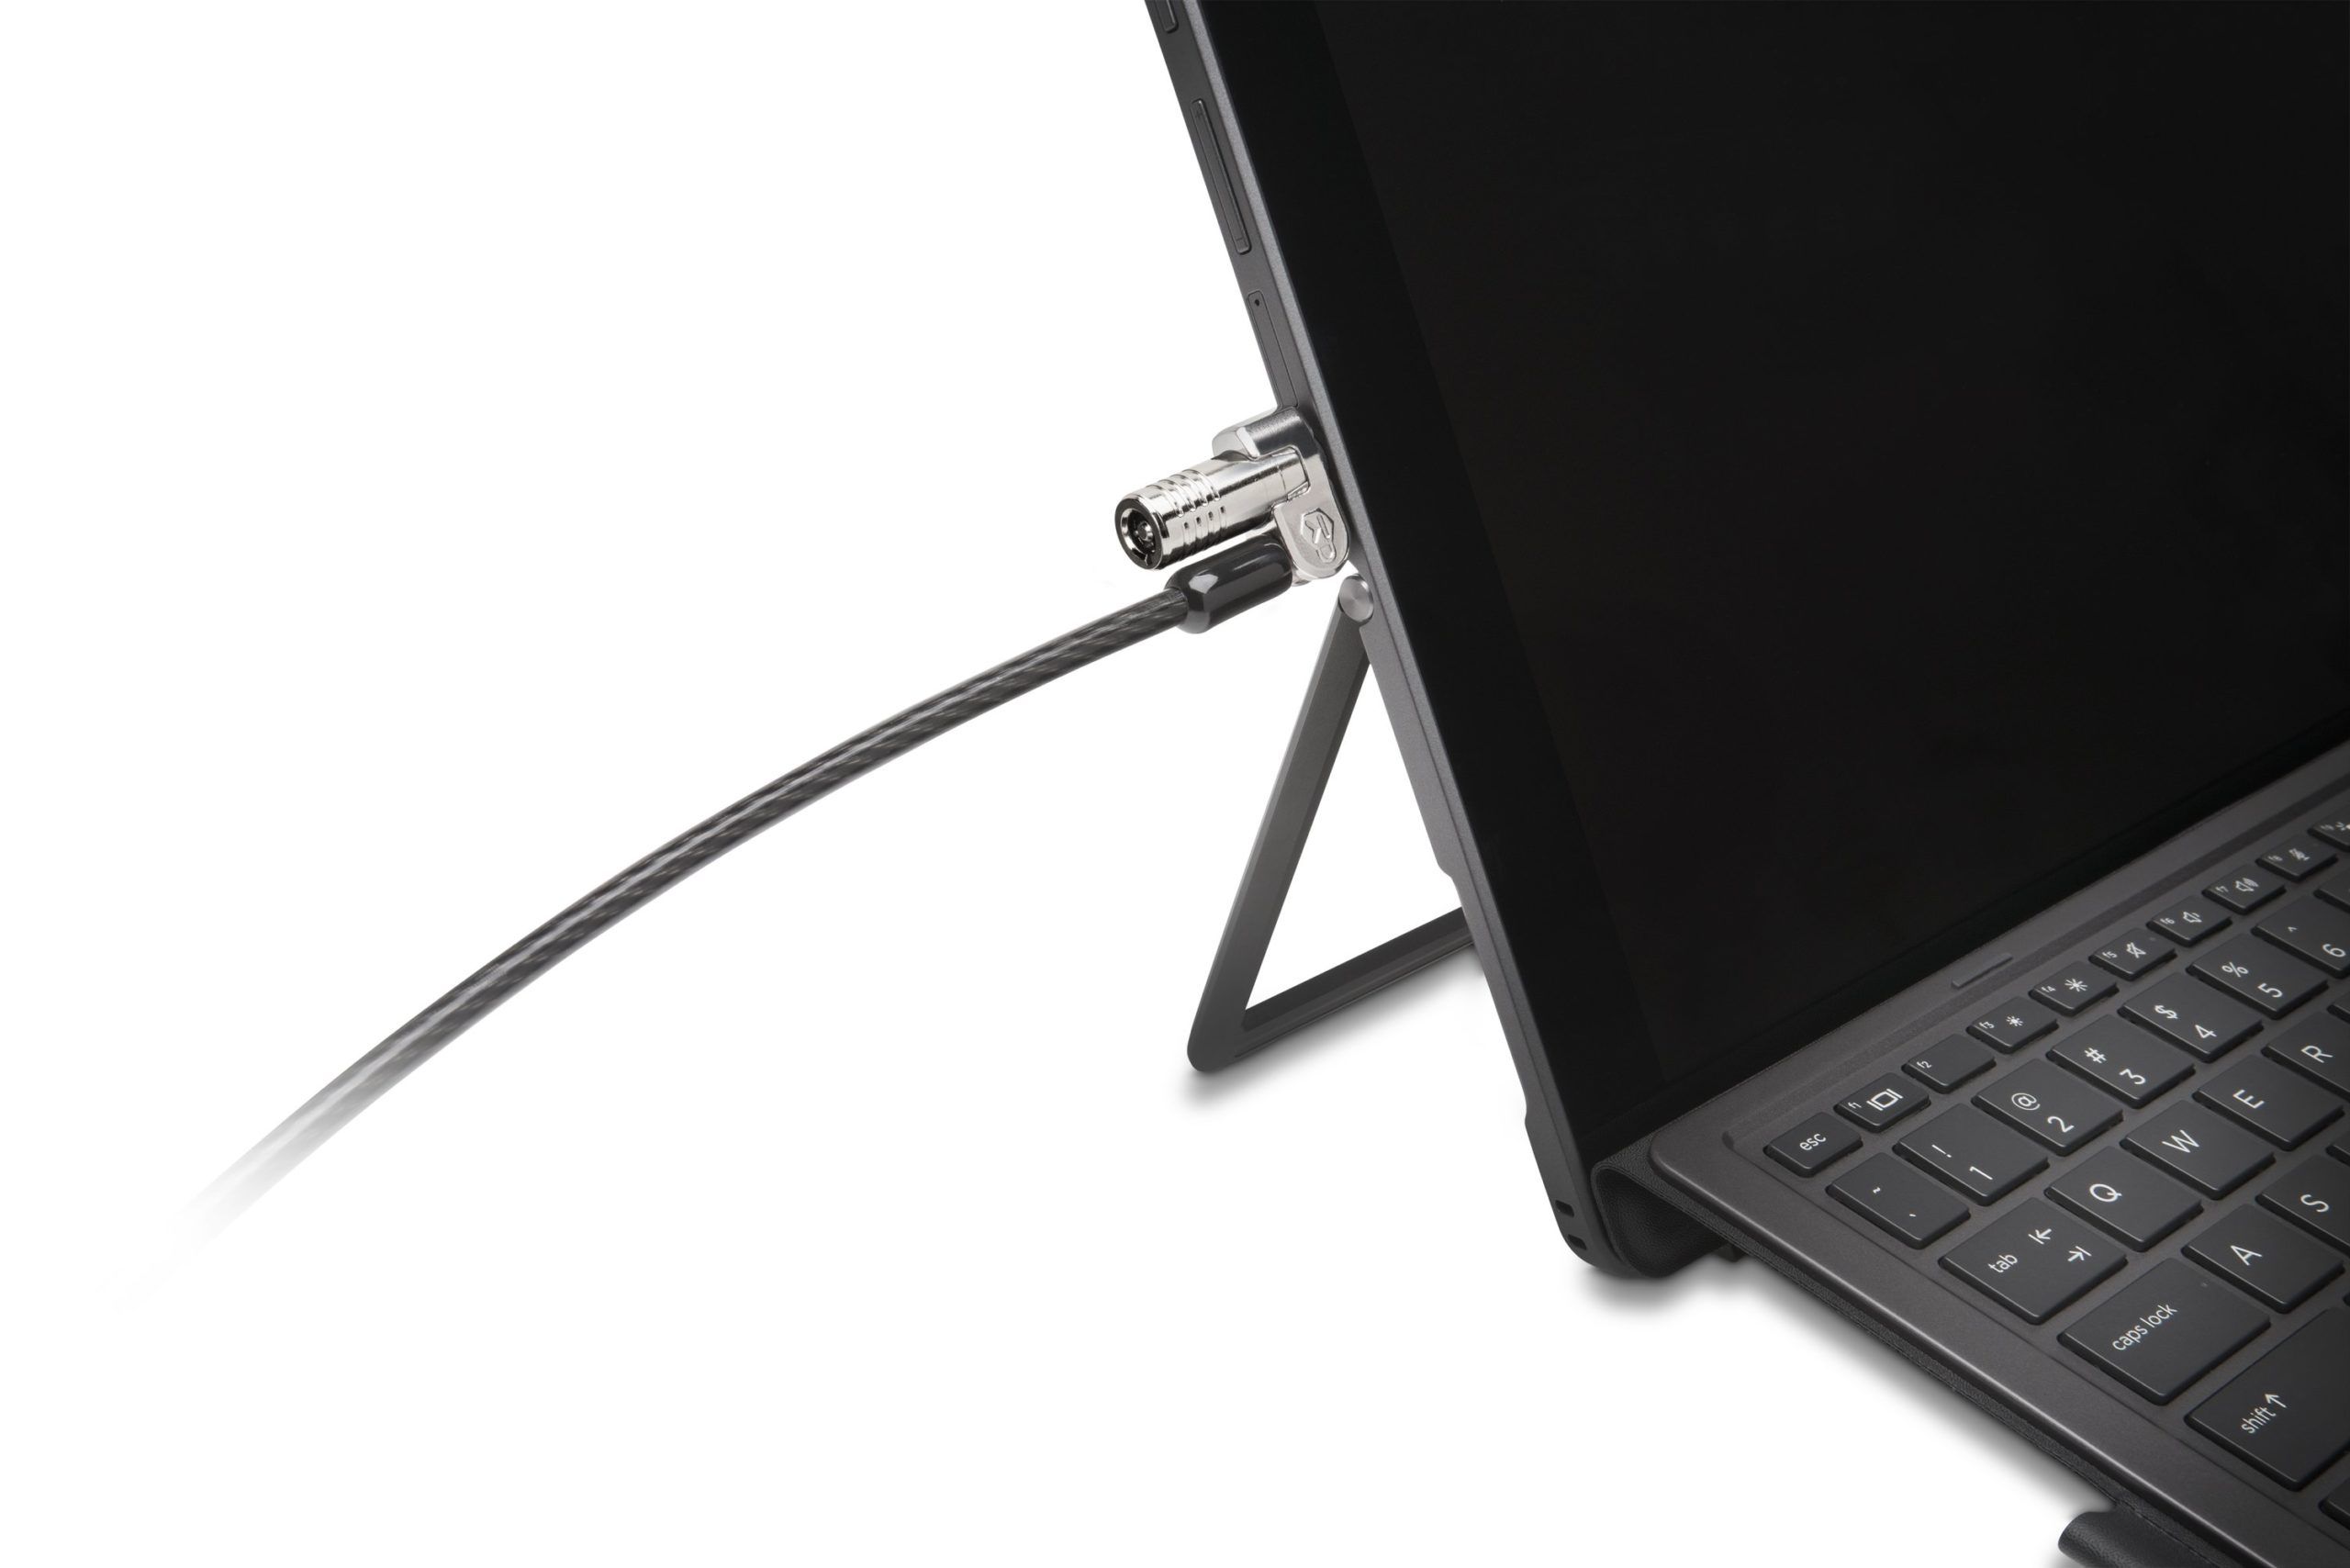 CABLU securitate KENSINGTON pt. notebook slot Nano, cheie standard, conectare directa,1.8m, cablu otel carbon, 5mm, permite pivotare si rotire cablu, 